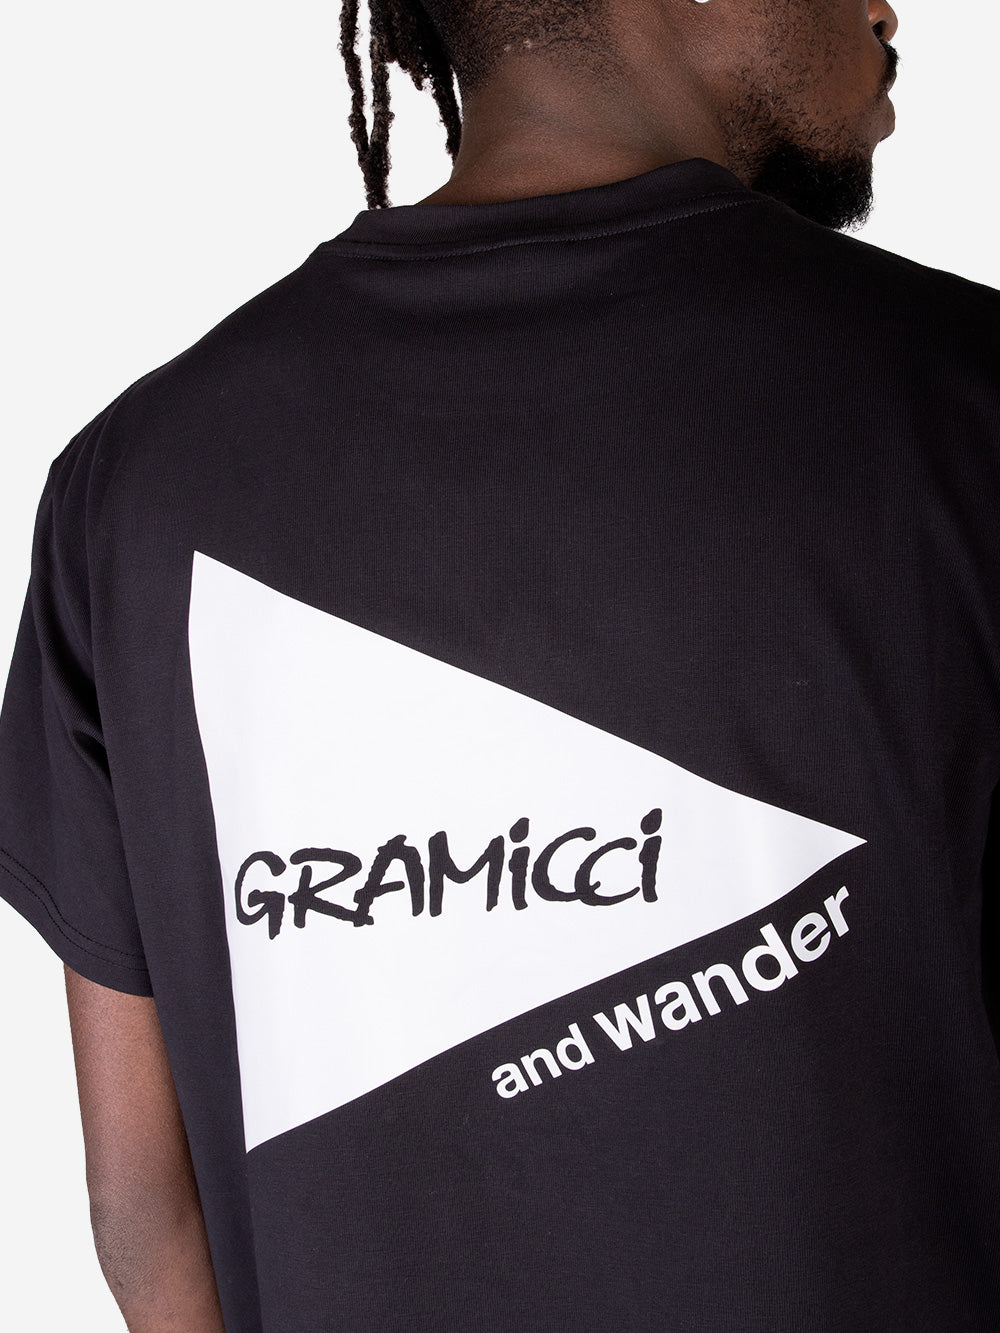 GRAMICCI Gramicci x and Wander T-shirt Nero Urbanstaroma